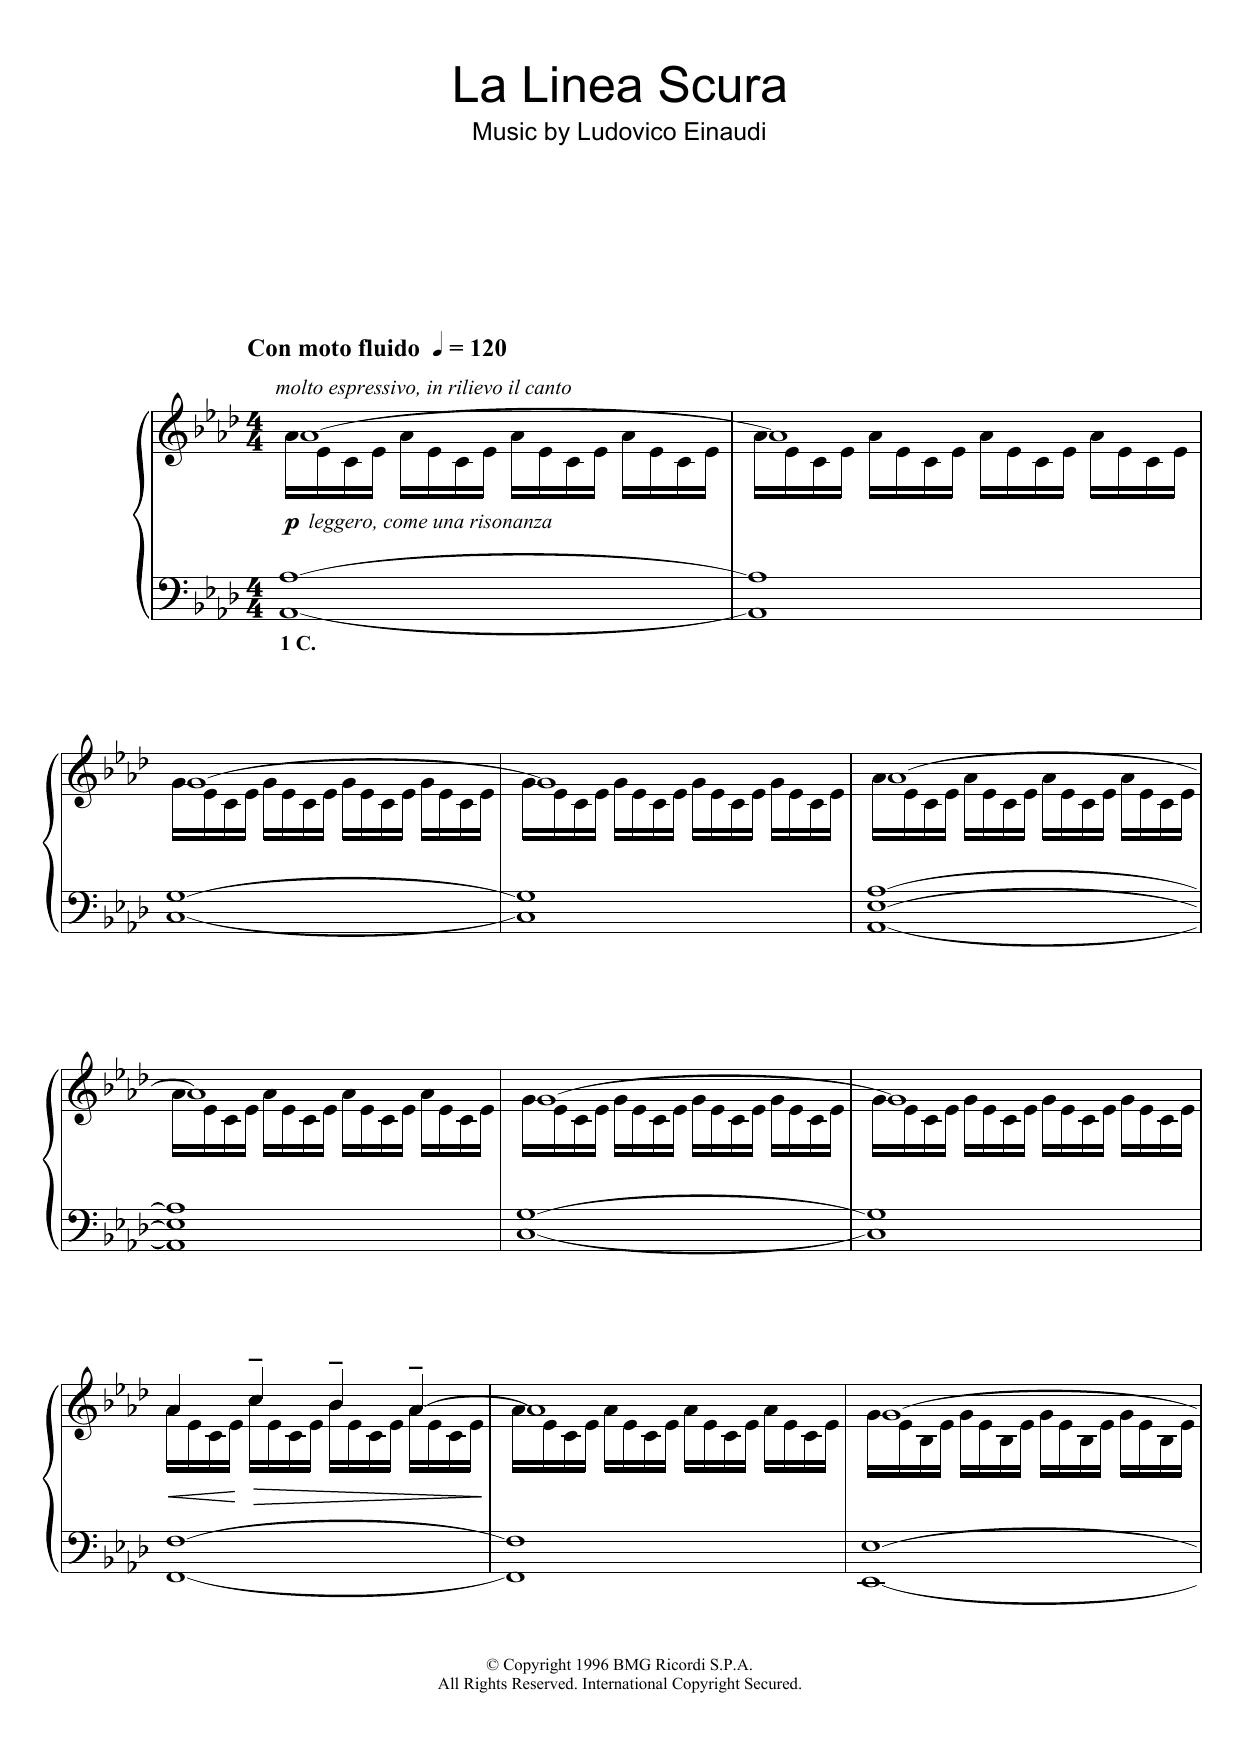 Download Ludovico Einaudi La Linea Scura Sheet Music and learn how to play Piano PDF digital score in minutes